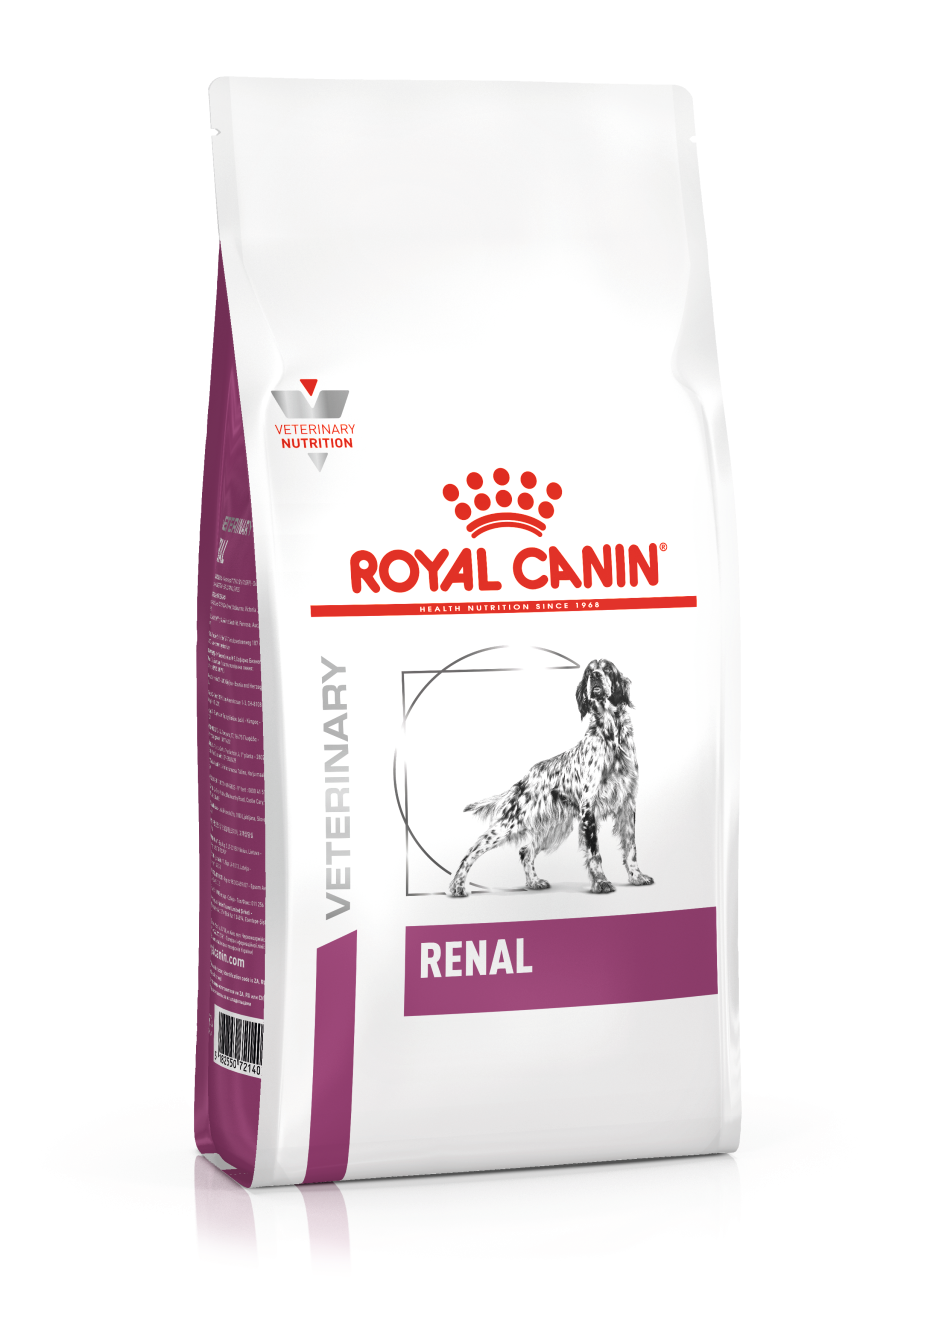 Royal Canin Renal hond  <br> 1x 7 kg